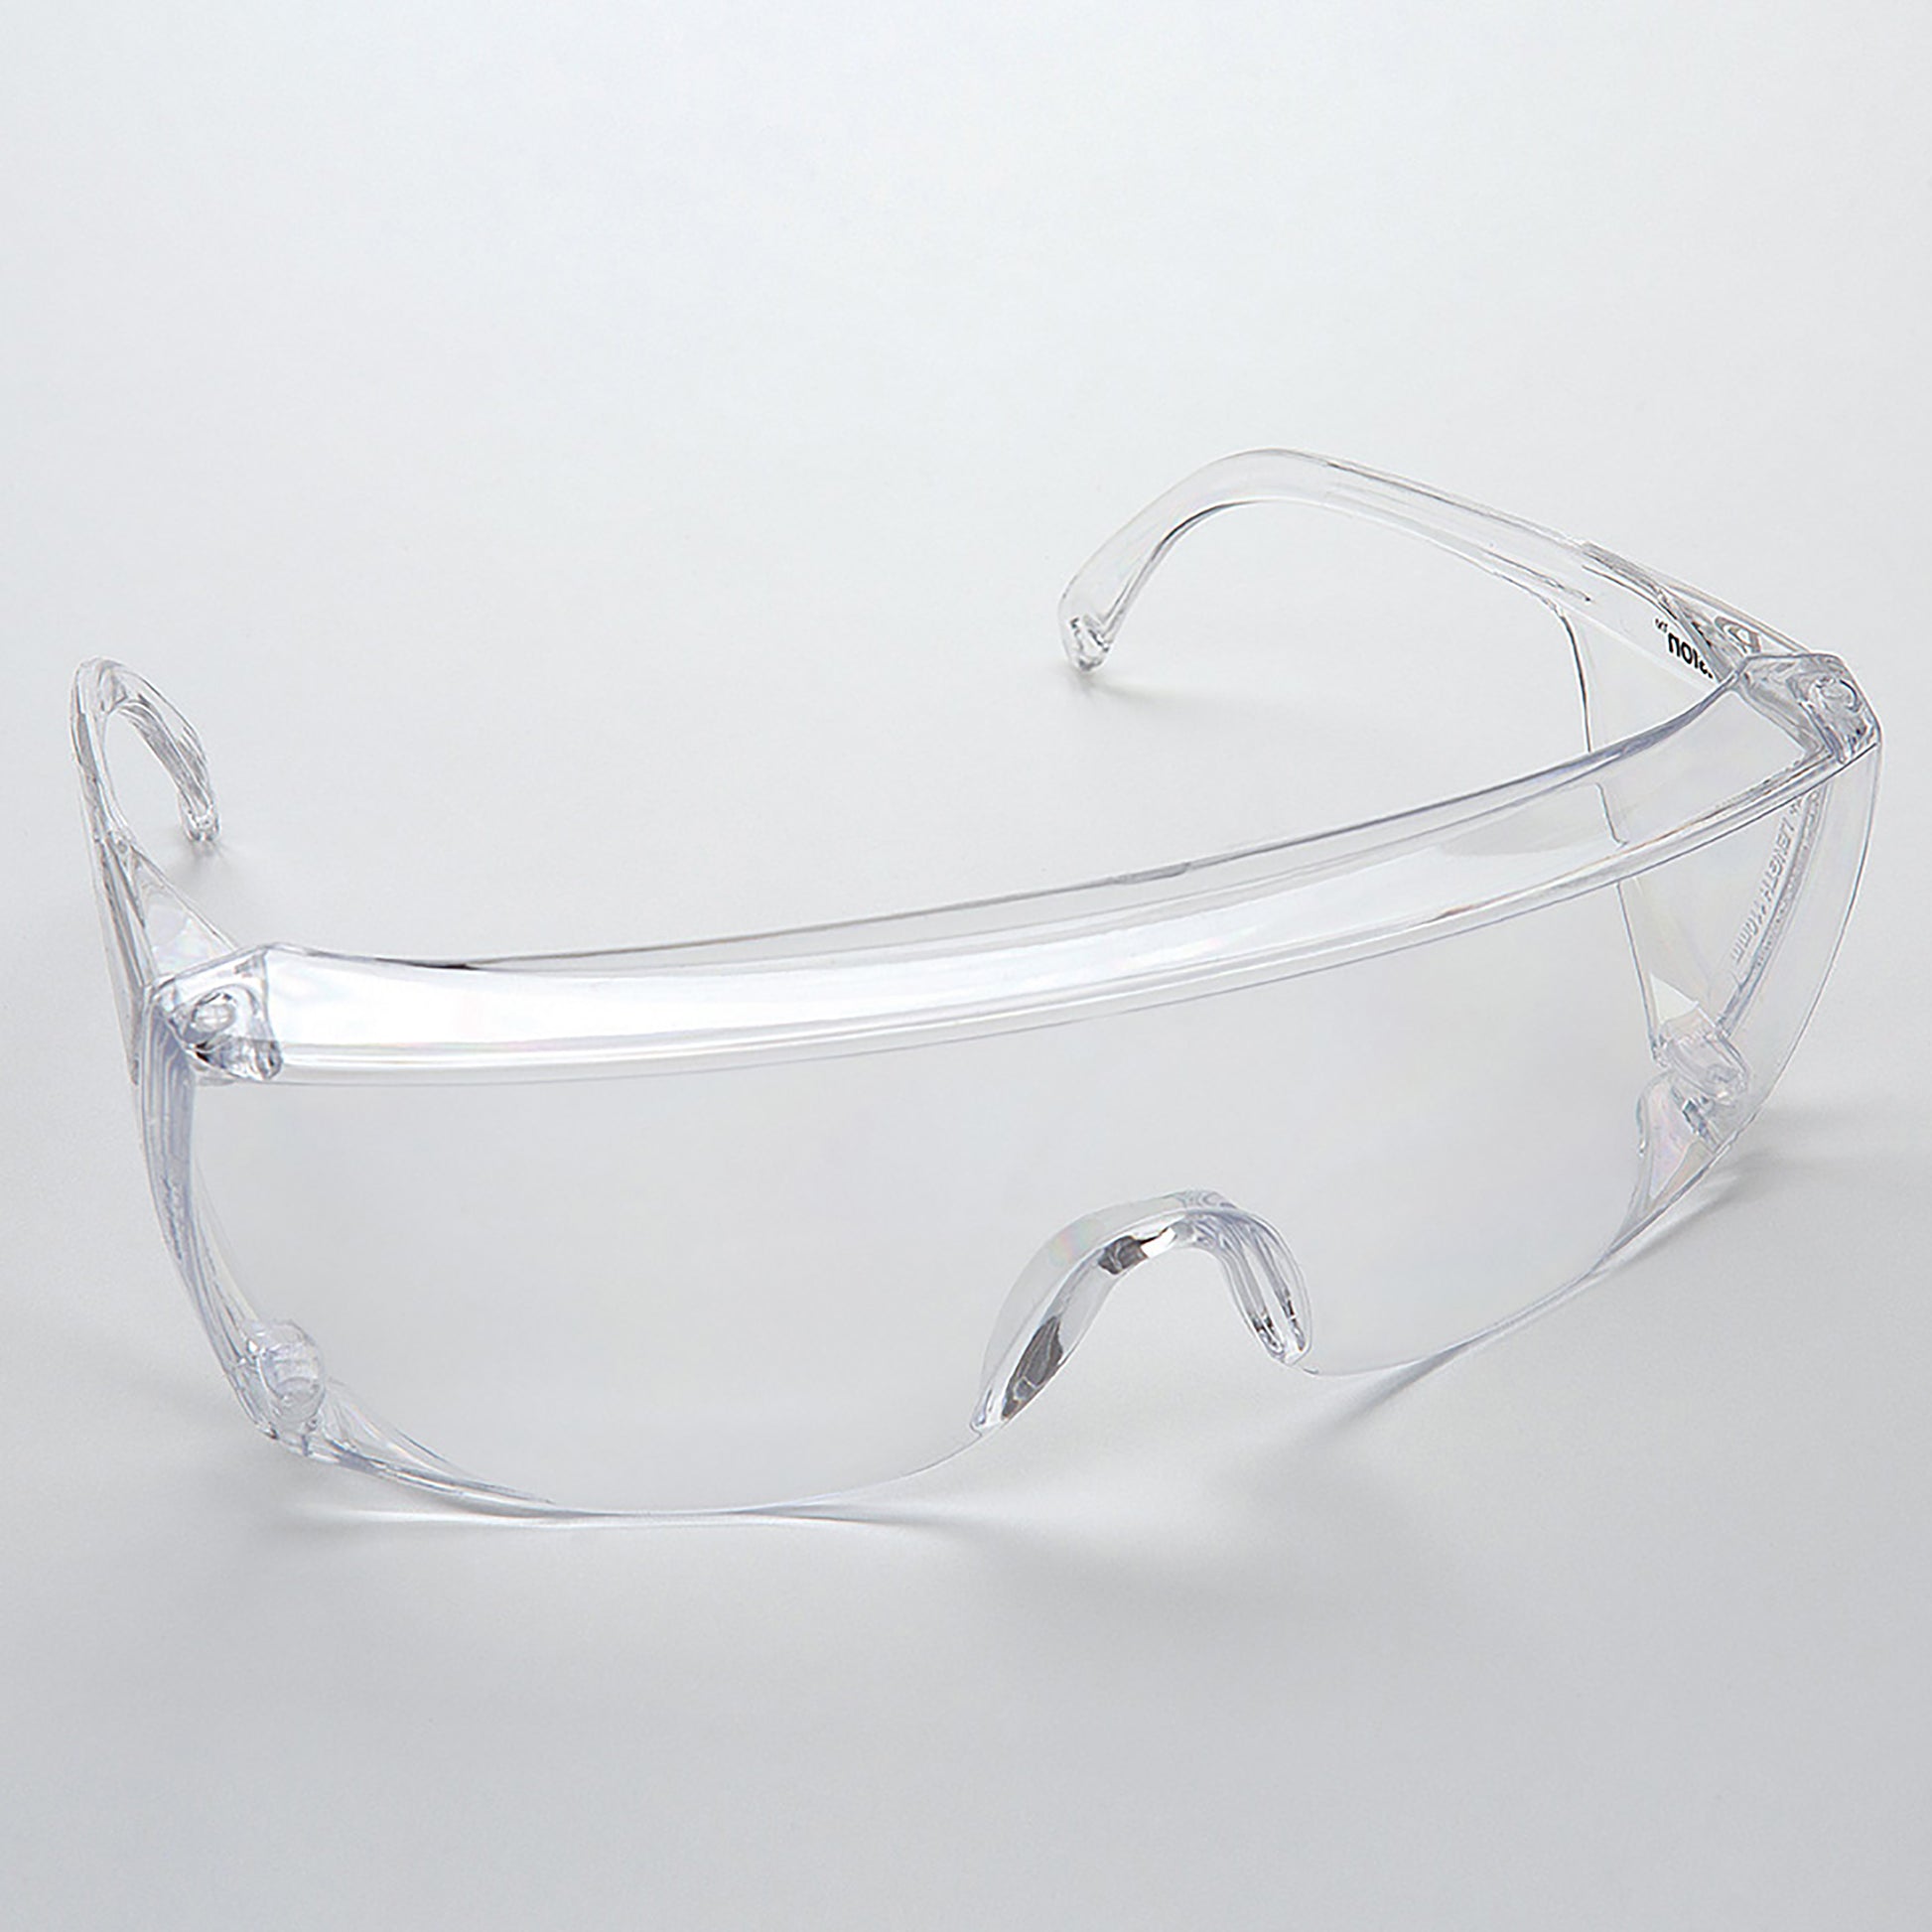 EyeSavers Eyewear, Clear Frame - Clear Lens